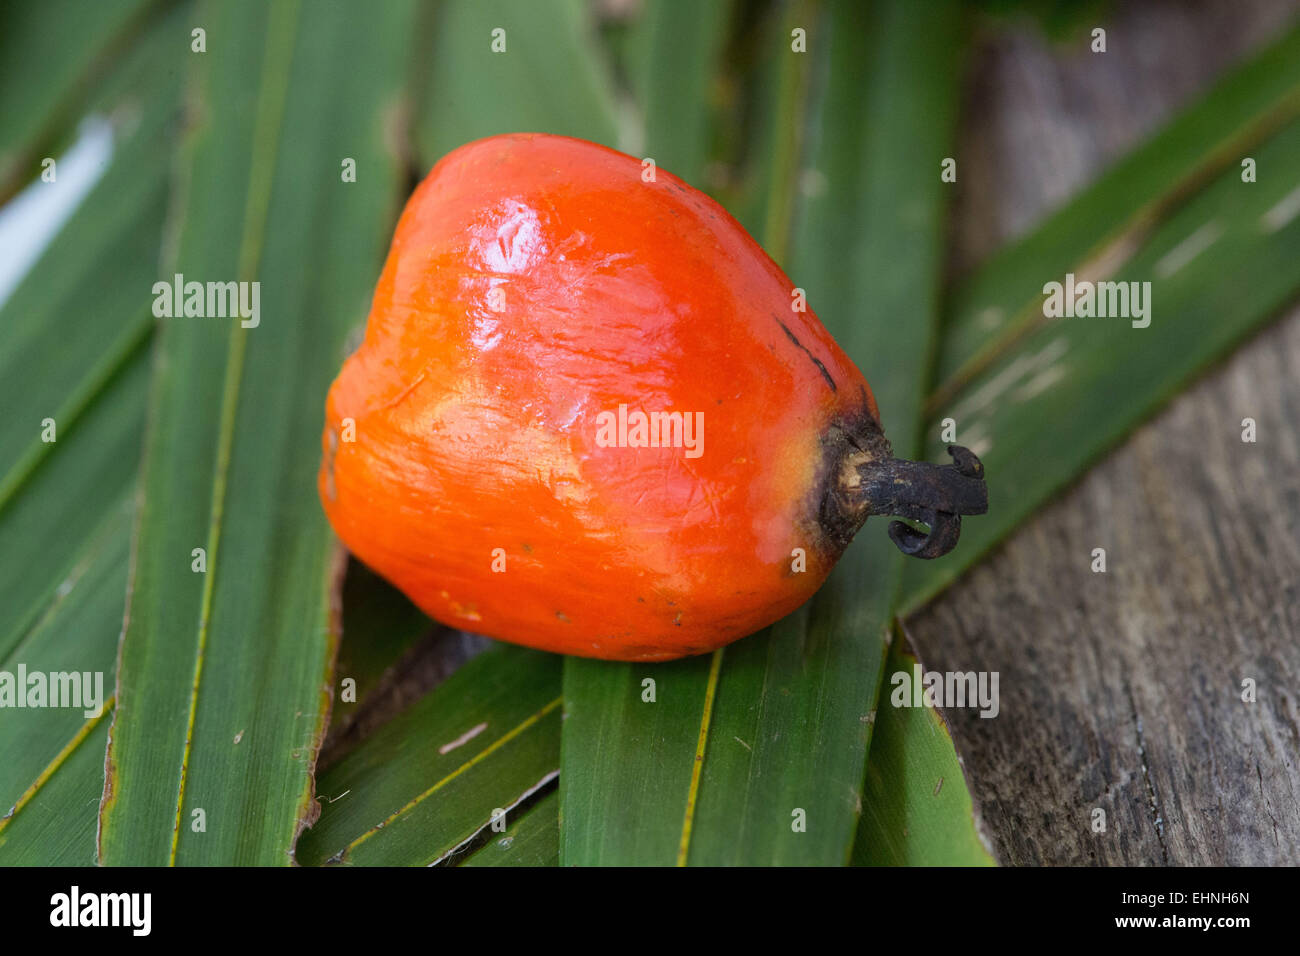 Tuercas de Palm, la fruta de la palma de aceite. Foto de stock